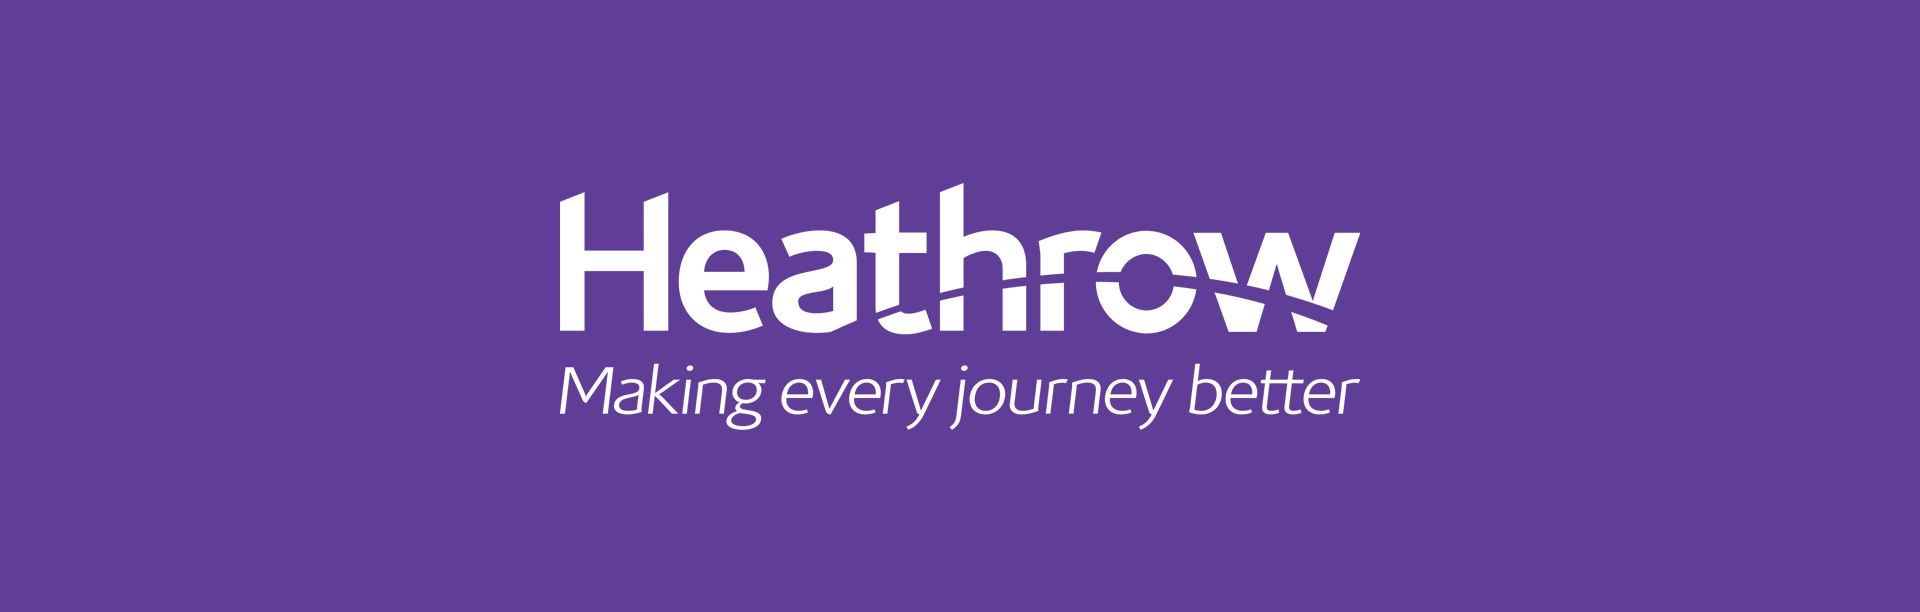 Heathrow Airport Ltd logo